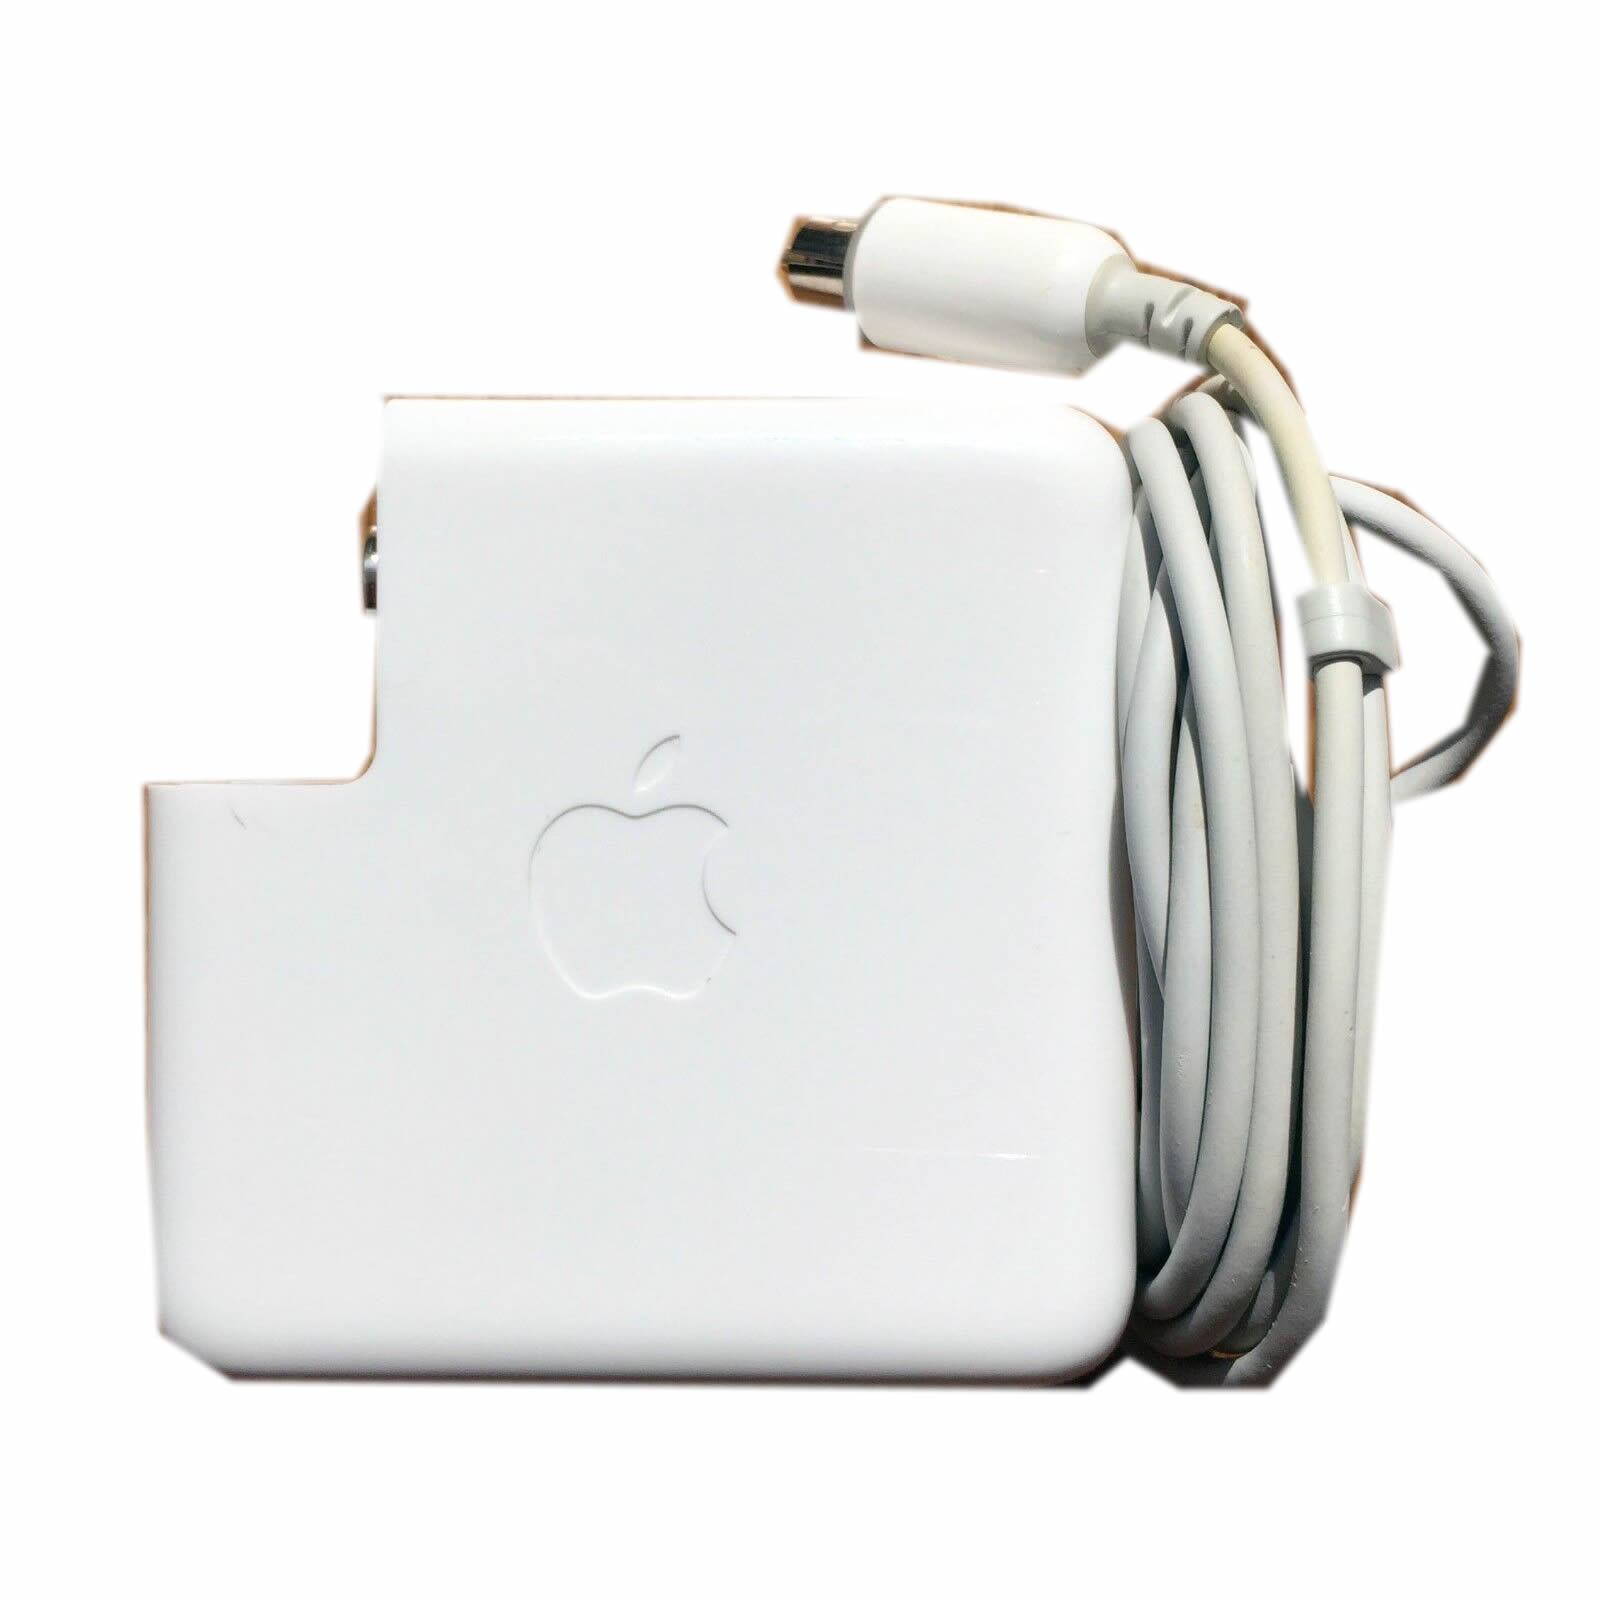 apple powerbook g4 m9970f/a laptop ac adapter